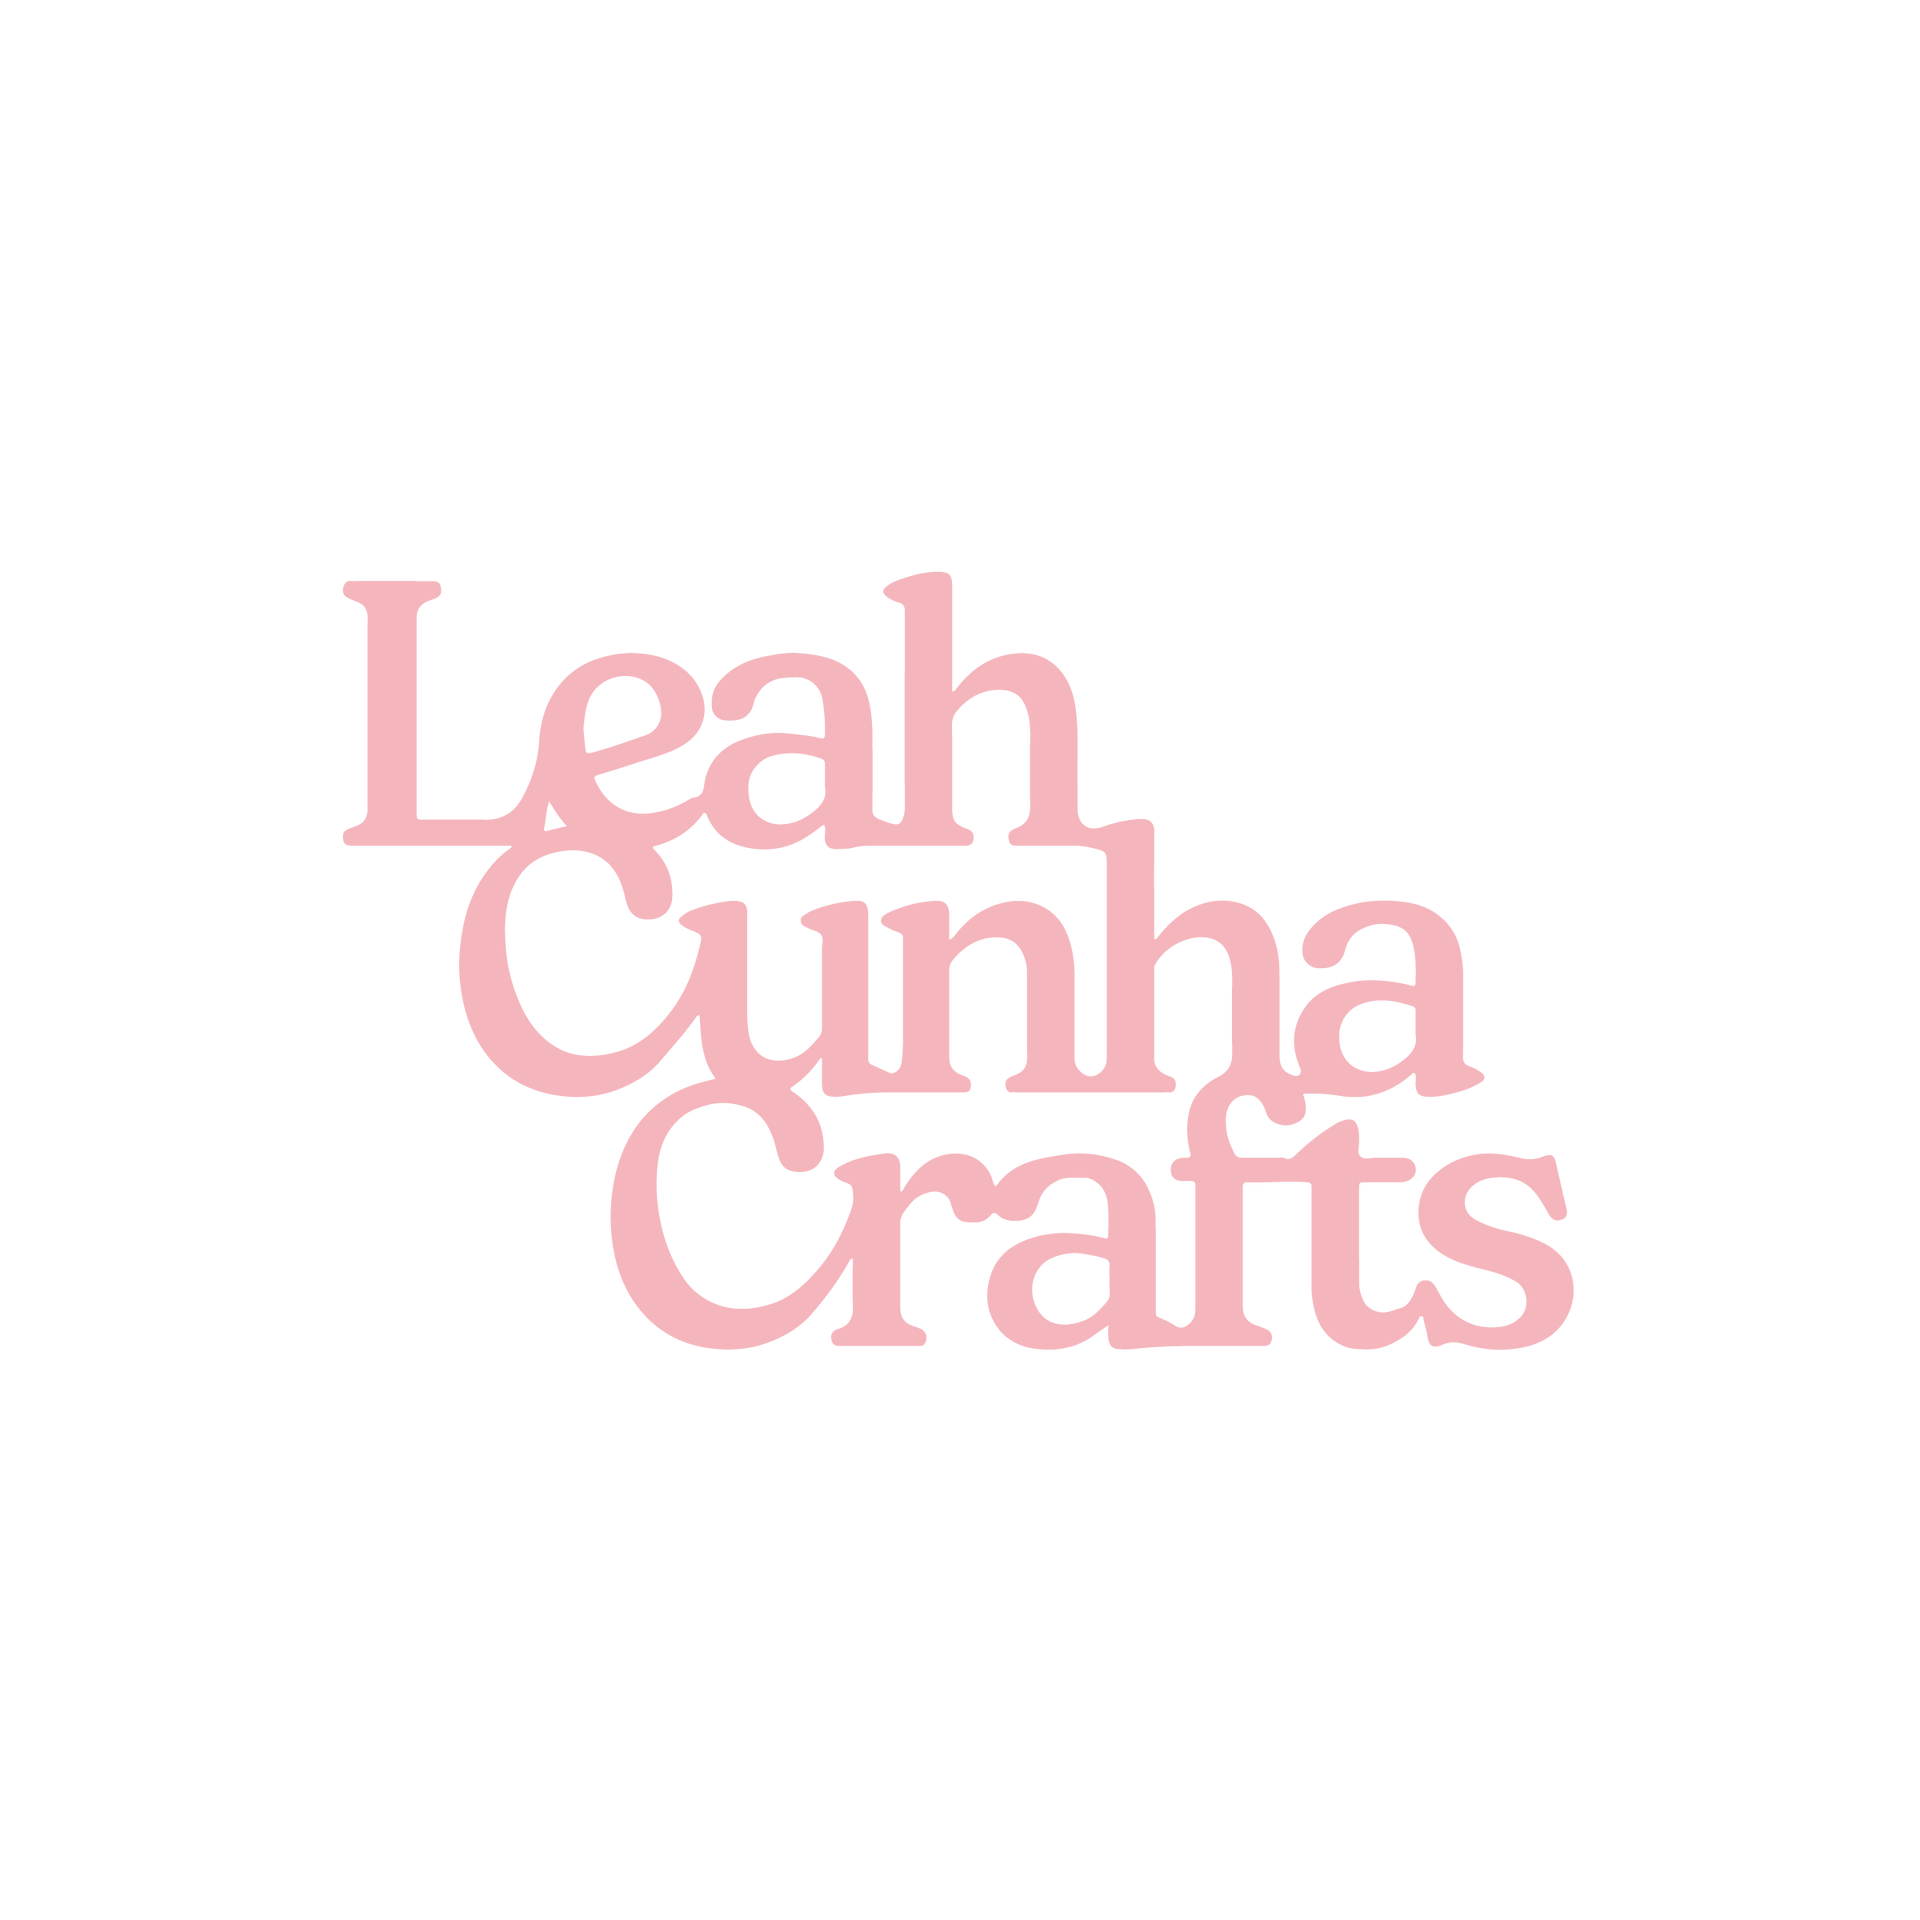 Leah Cunha Crafts